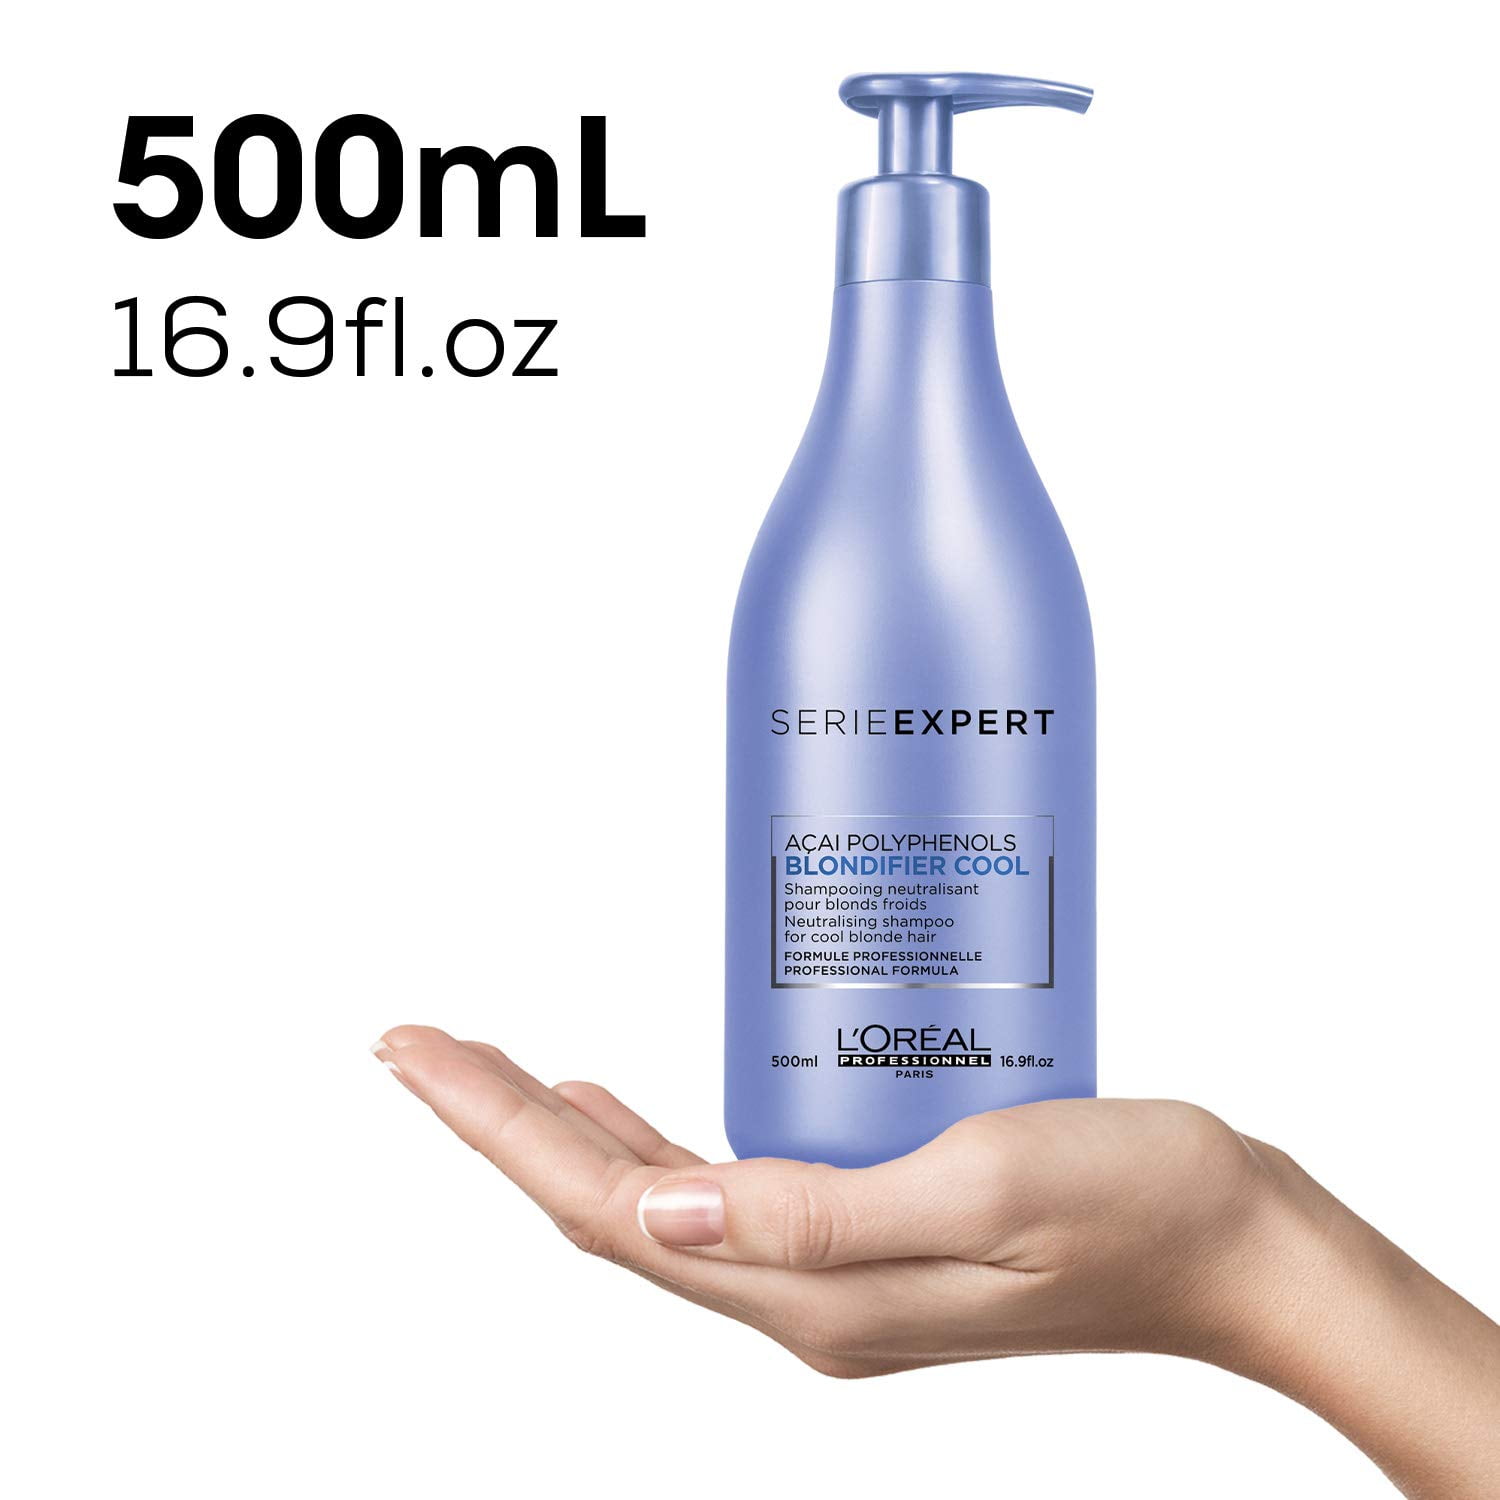 L'Oreal Professionnel Serie Expert Shampoo, 16.9fl.oz. -